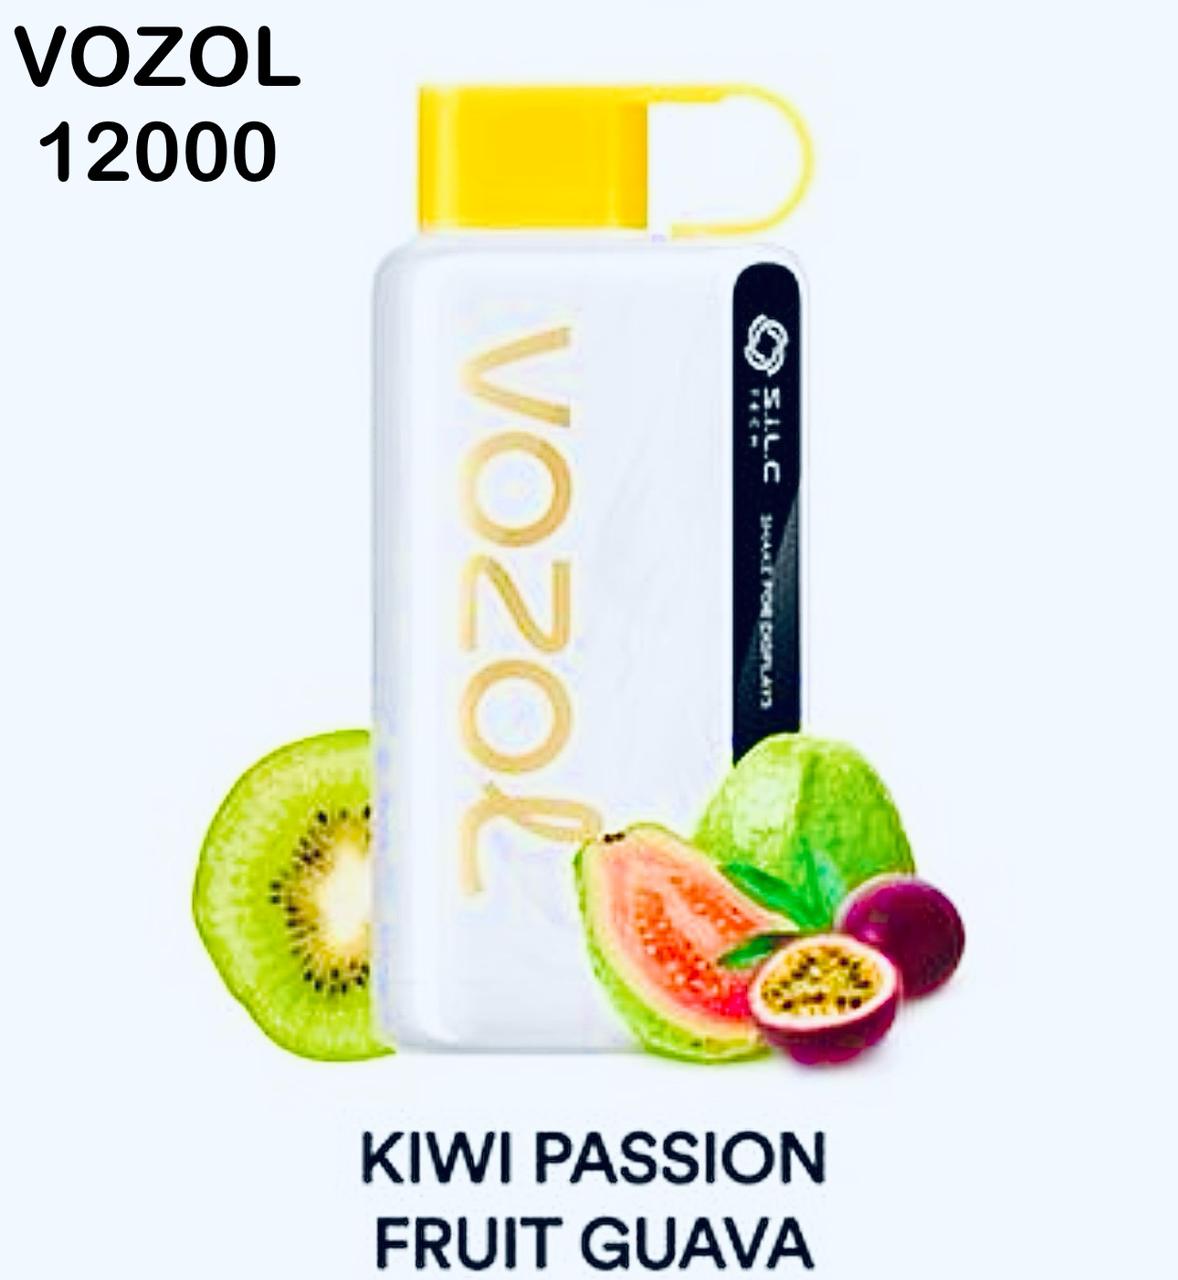 KIWI PASSION FRUIT GUAVA